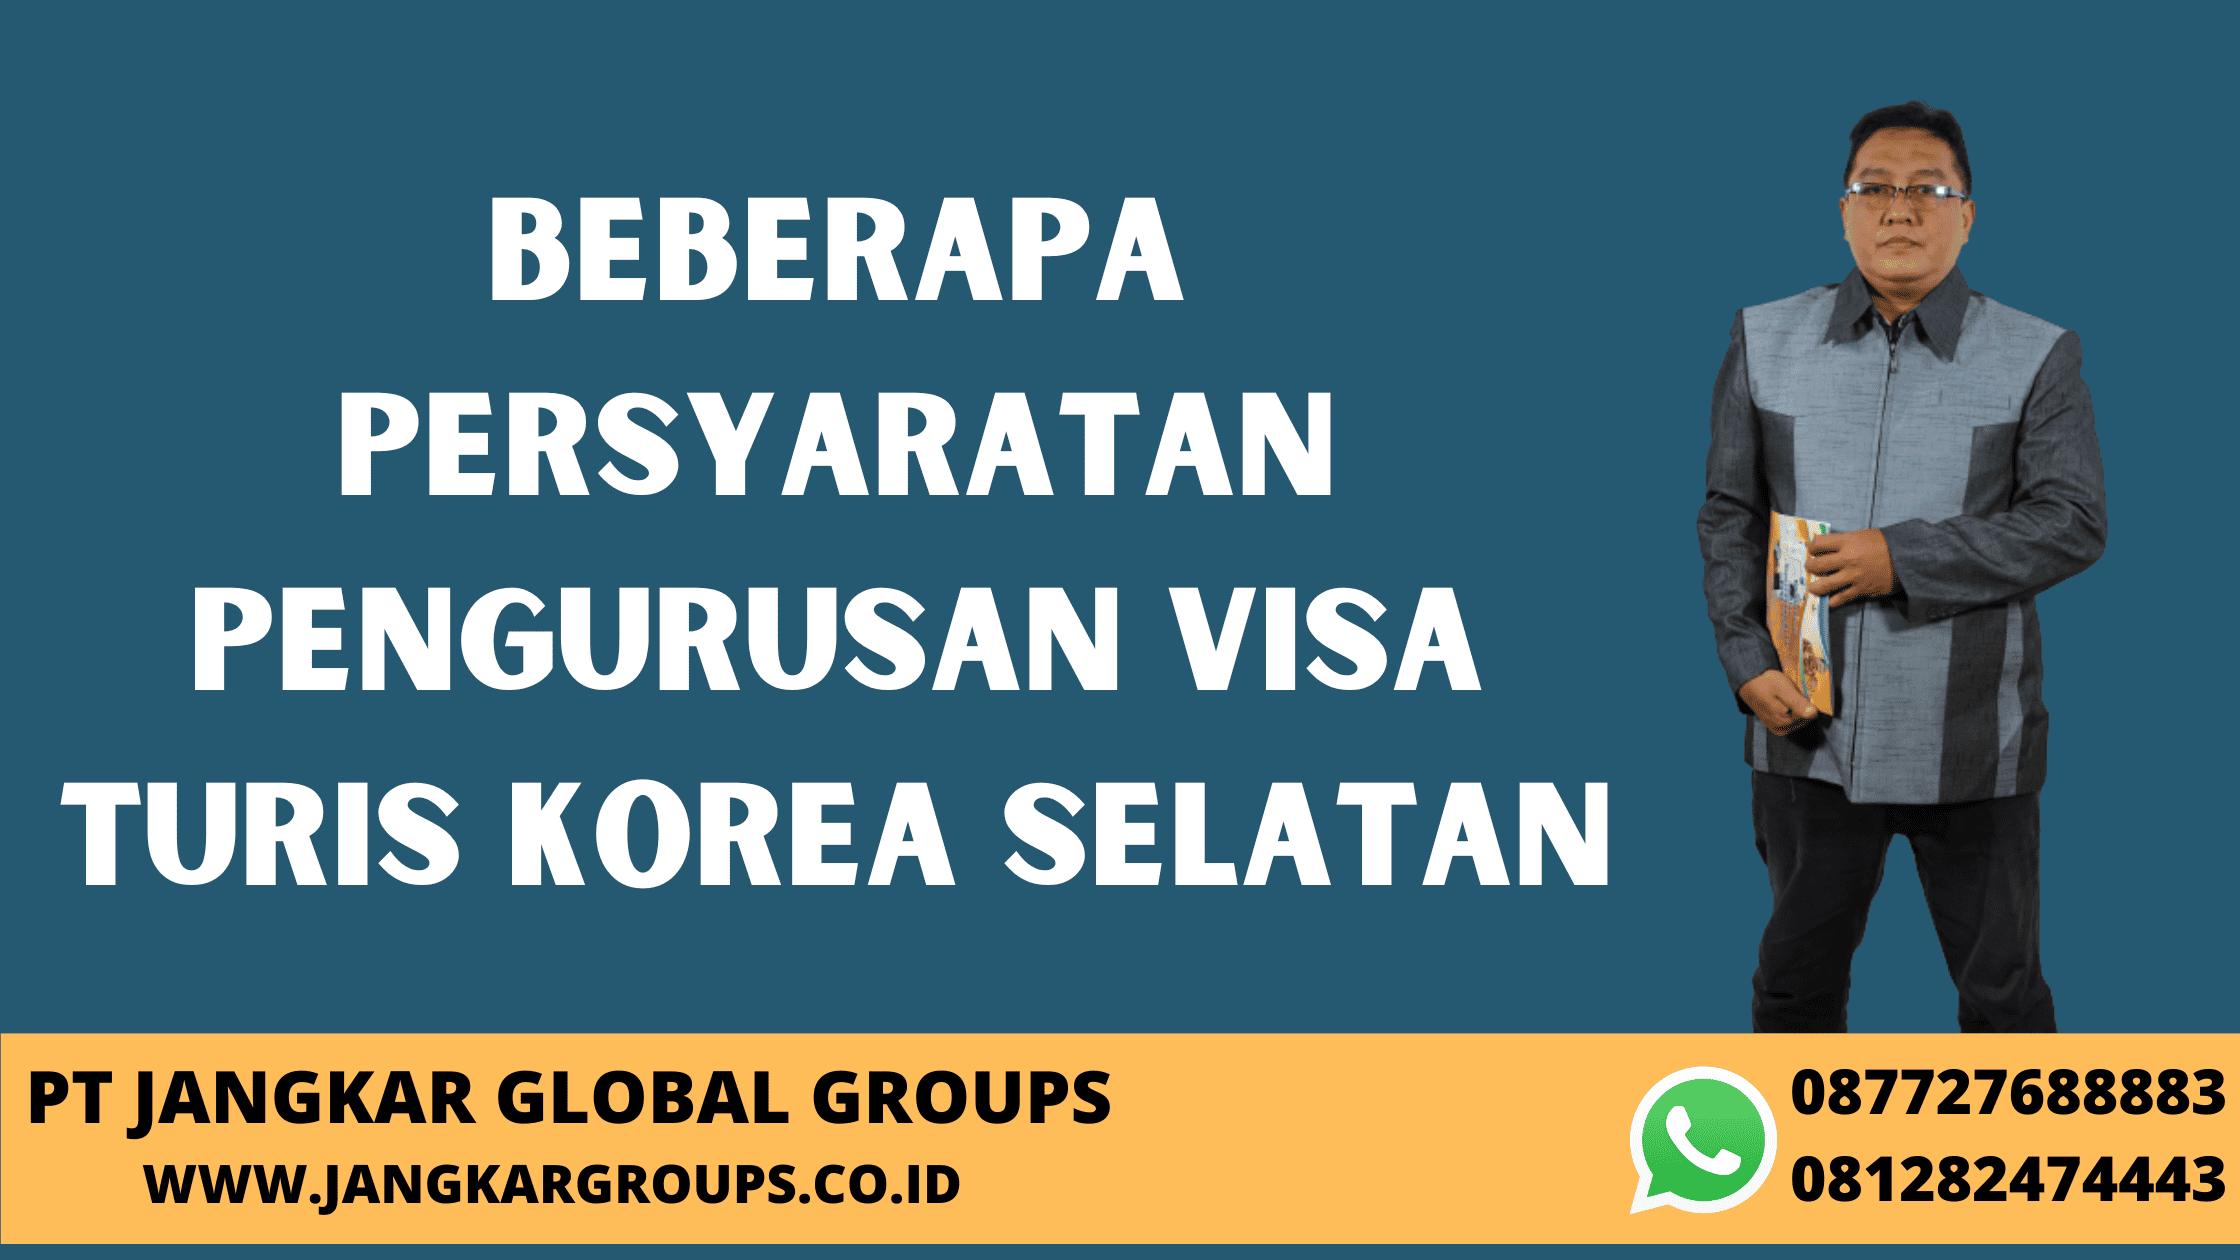 Beberapa Persyaratan Pengurusan Visa Turis Korea Selatan